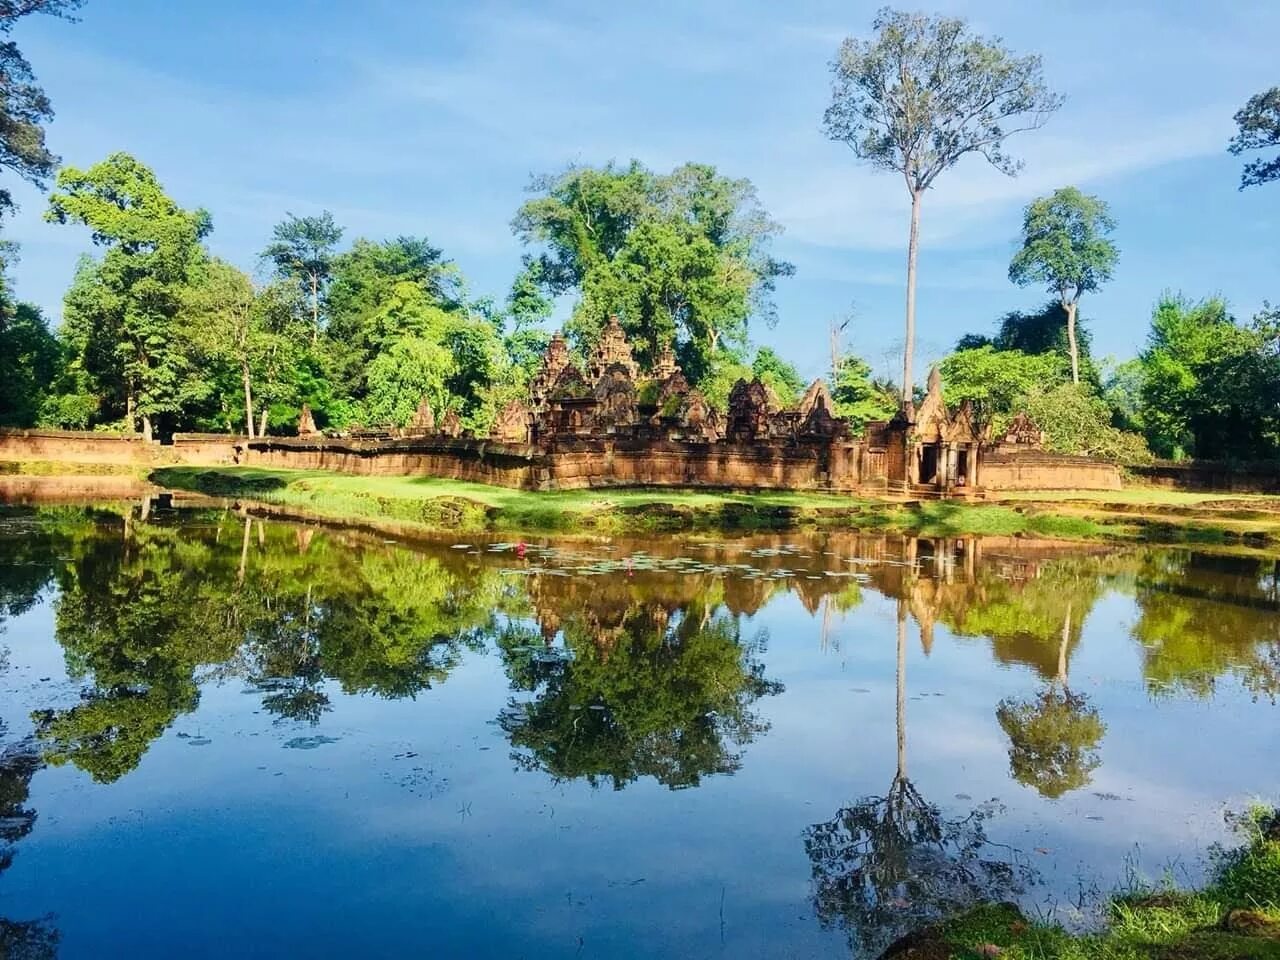 Камбоджа климат. 246 - Ангкор (Angkor). Малый круг Ангкор. Камбоджа пейзажи.